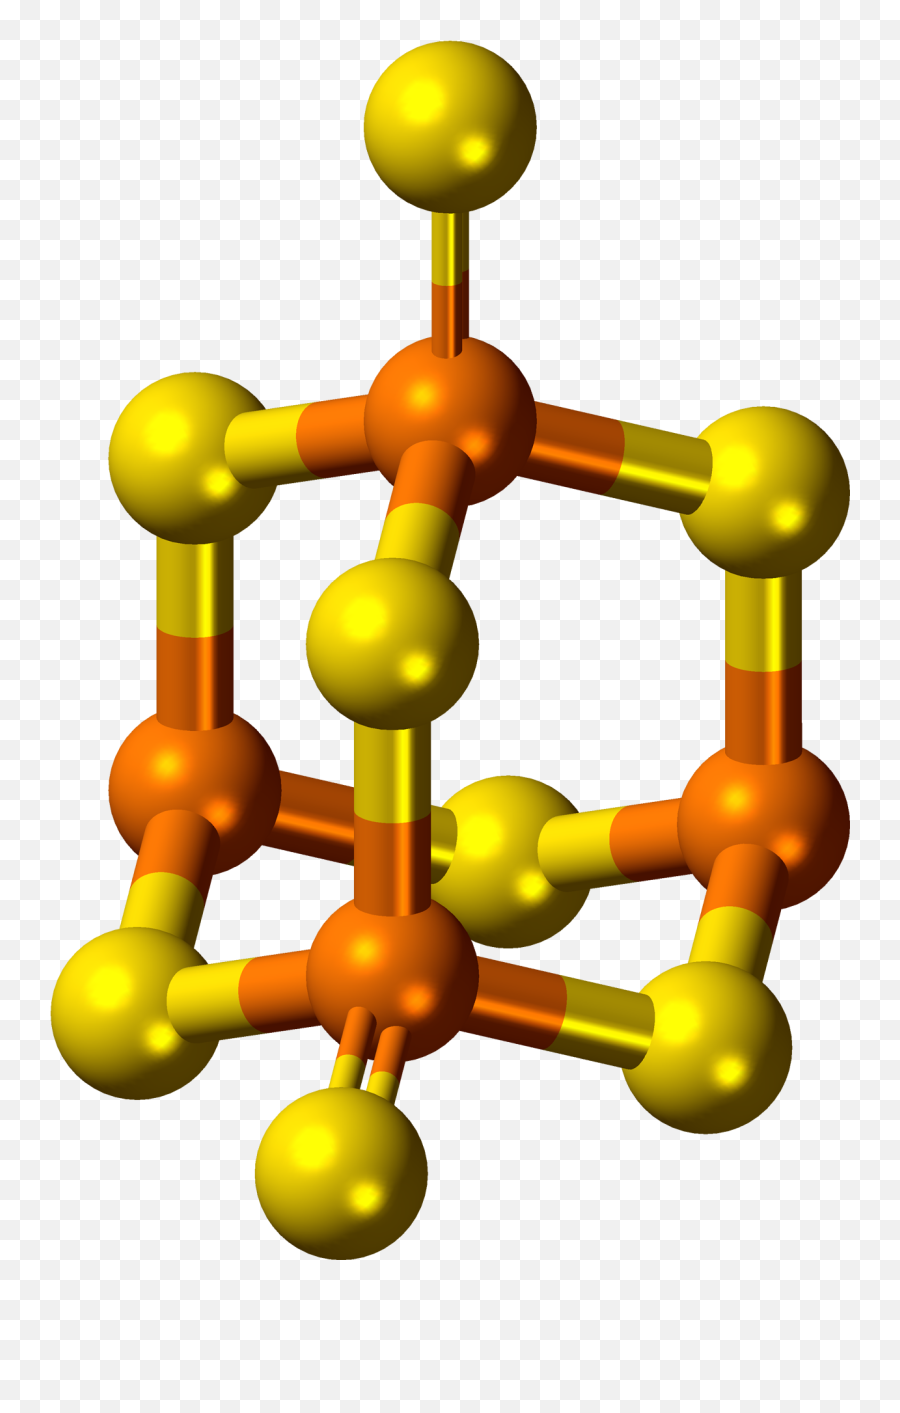 Filealpha - P4s8 3d Ballpng Wikimedia Commons Phosphorus Pentasulfide,Gold Ball Png